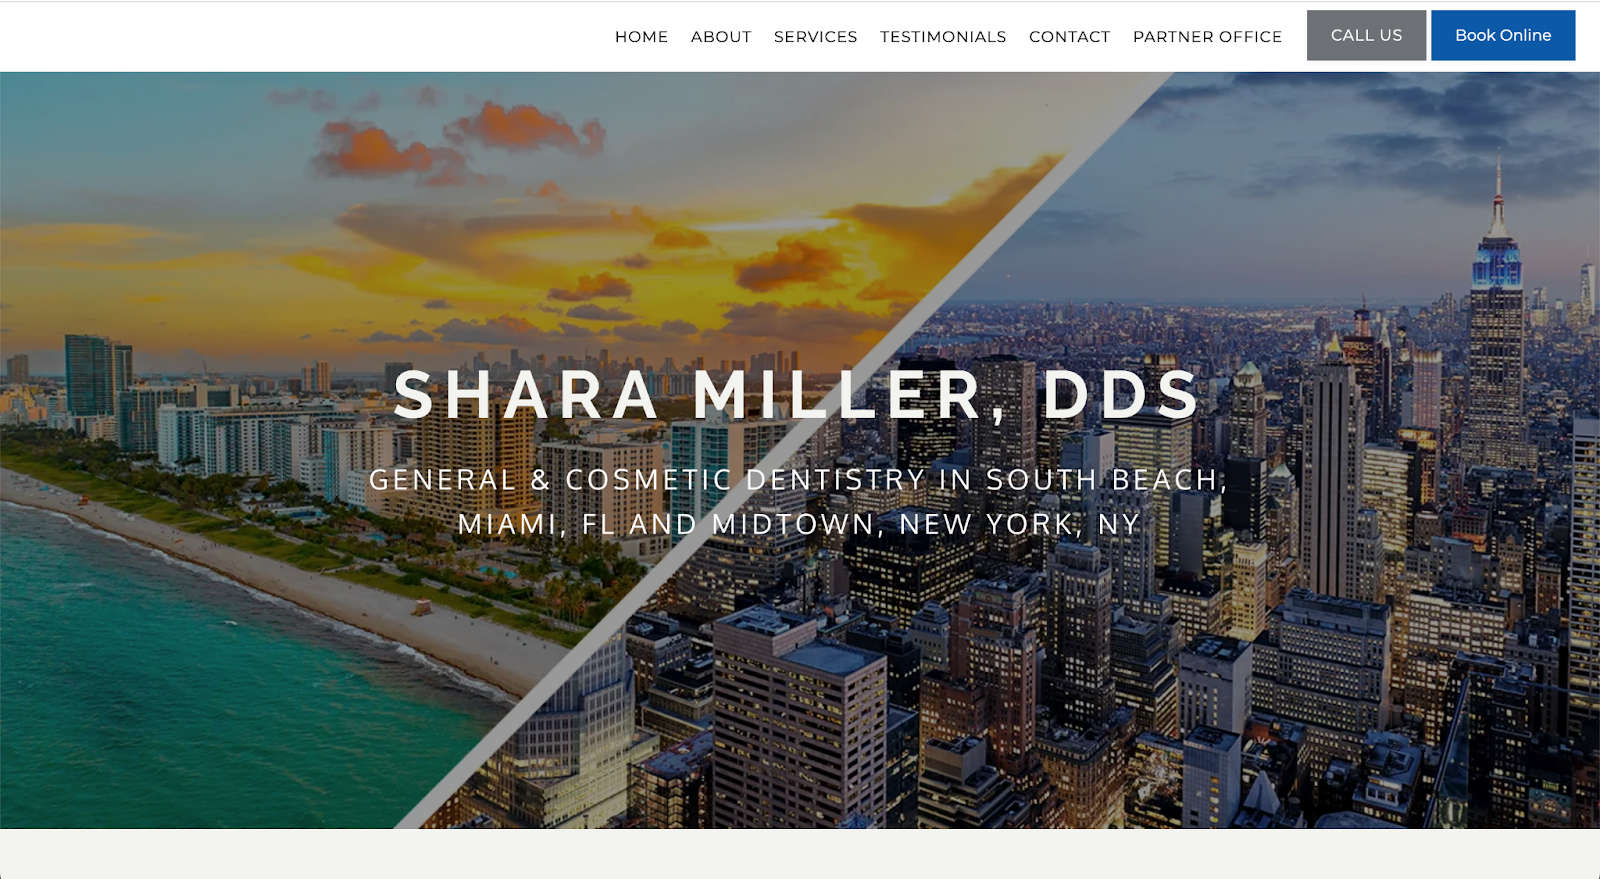 Take full advantage of your navigation like this dental website for Shara Miller DDs has